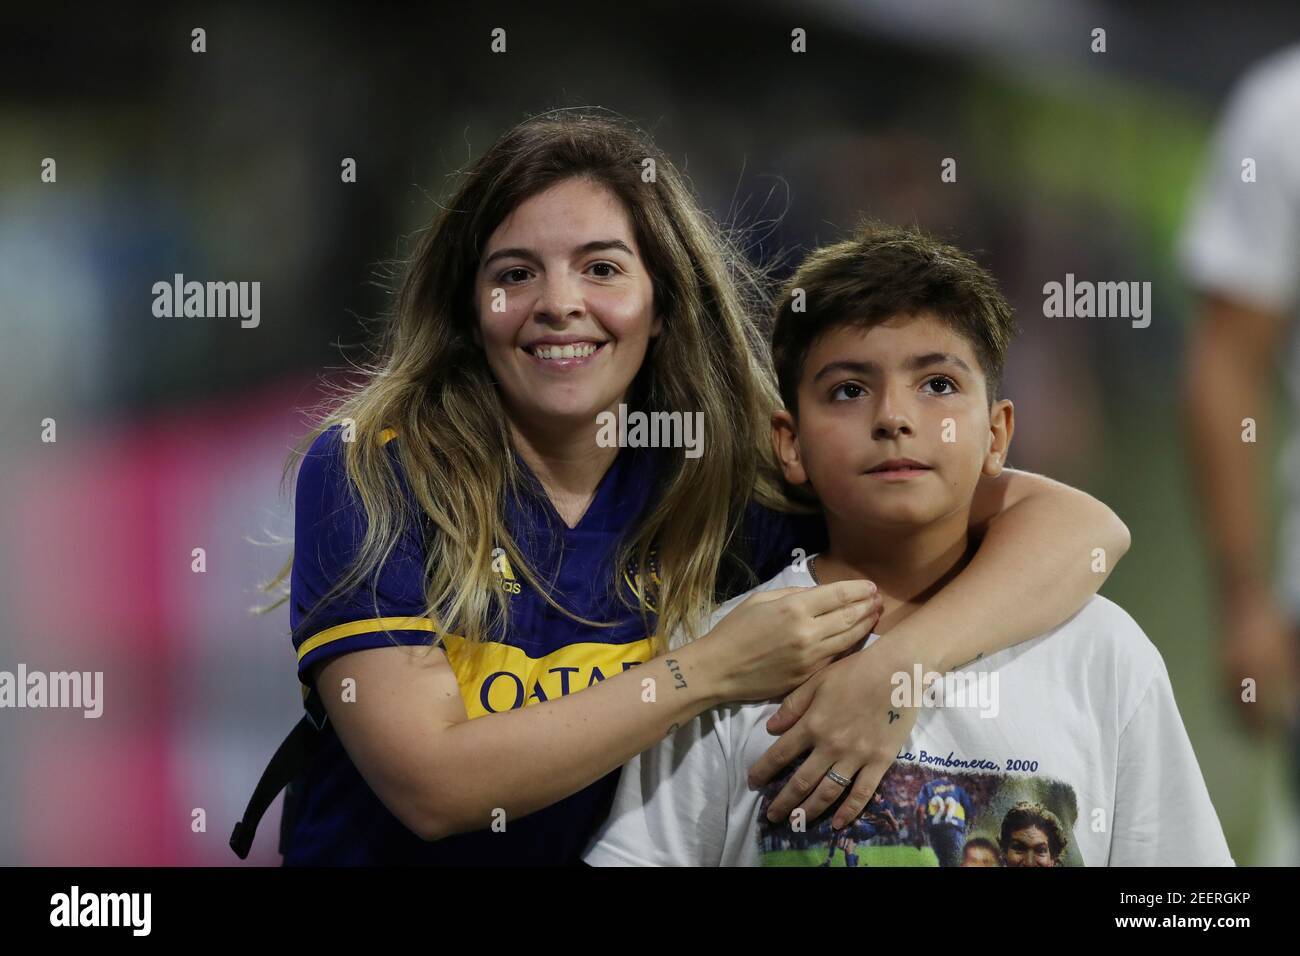 Dalma Maradona High Resolution Stock Photography and Images - Alamy